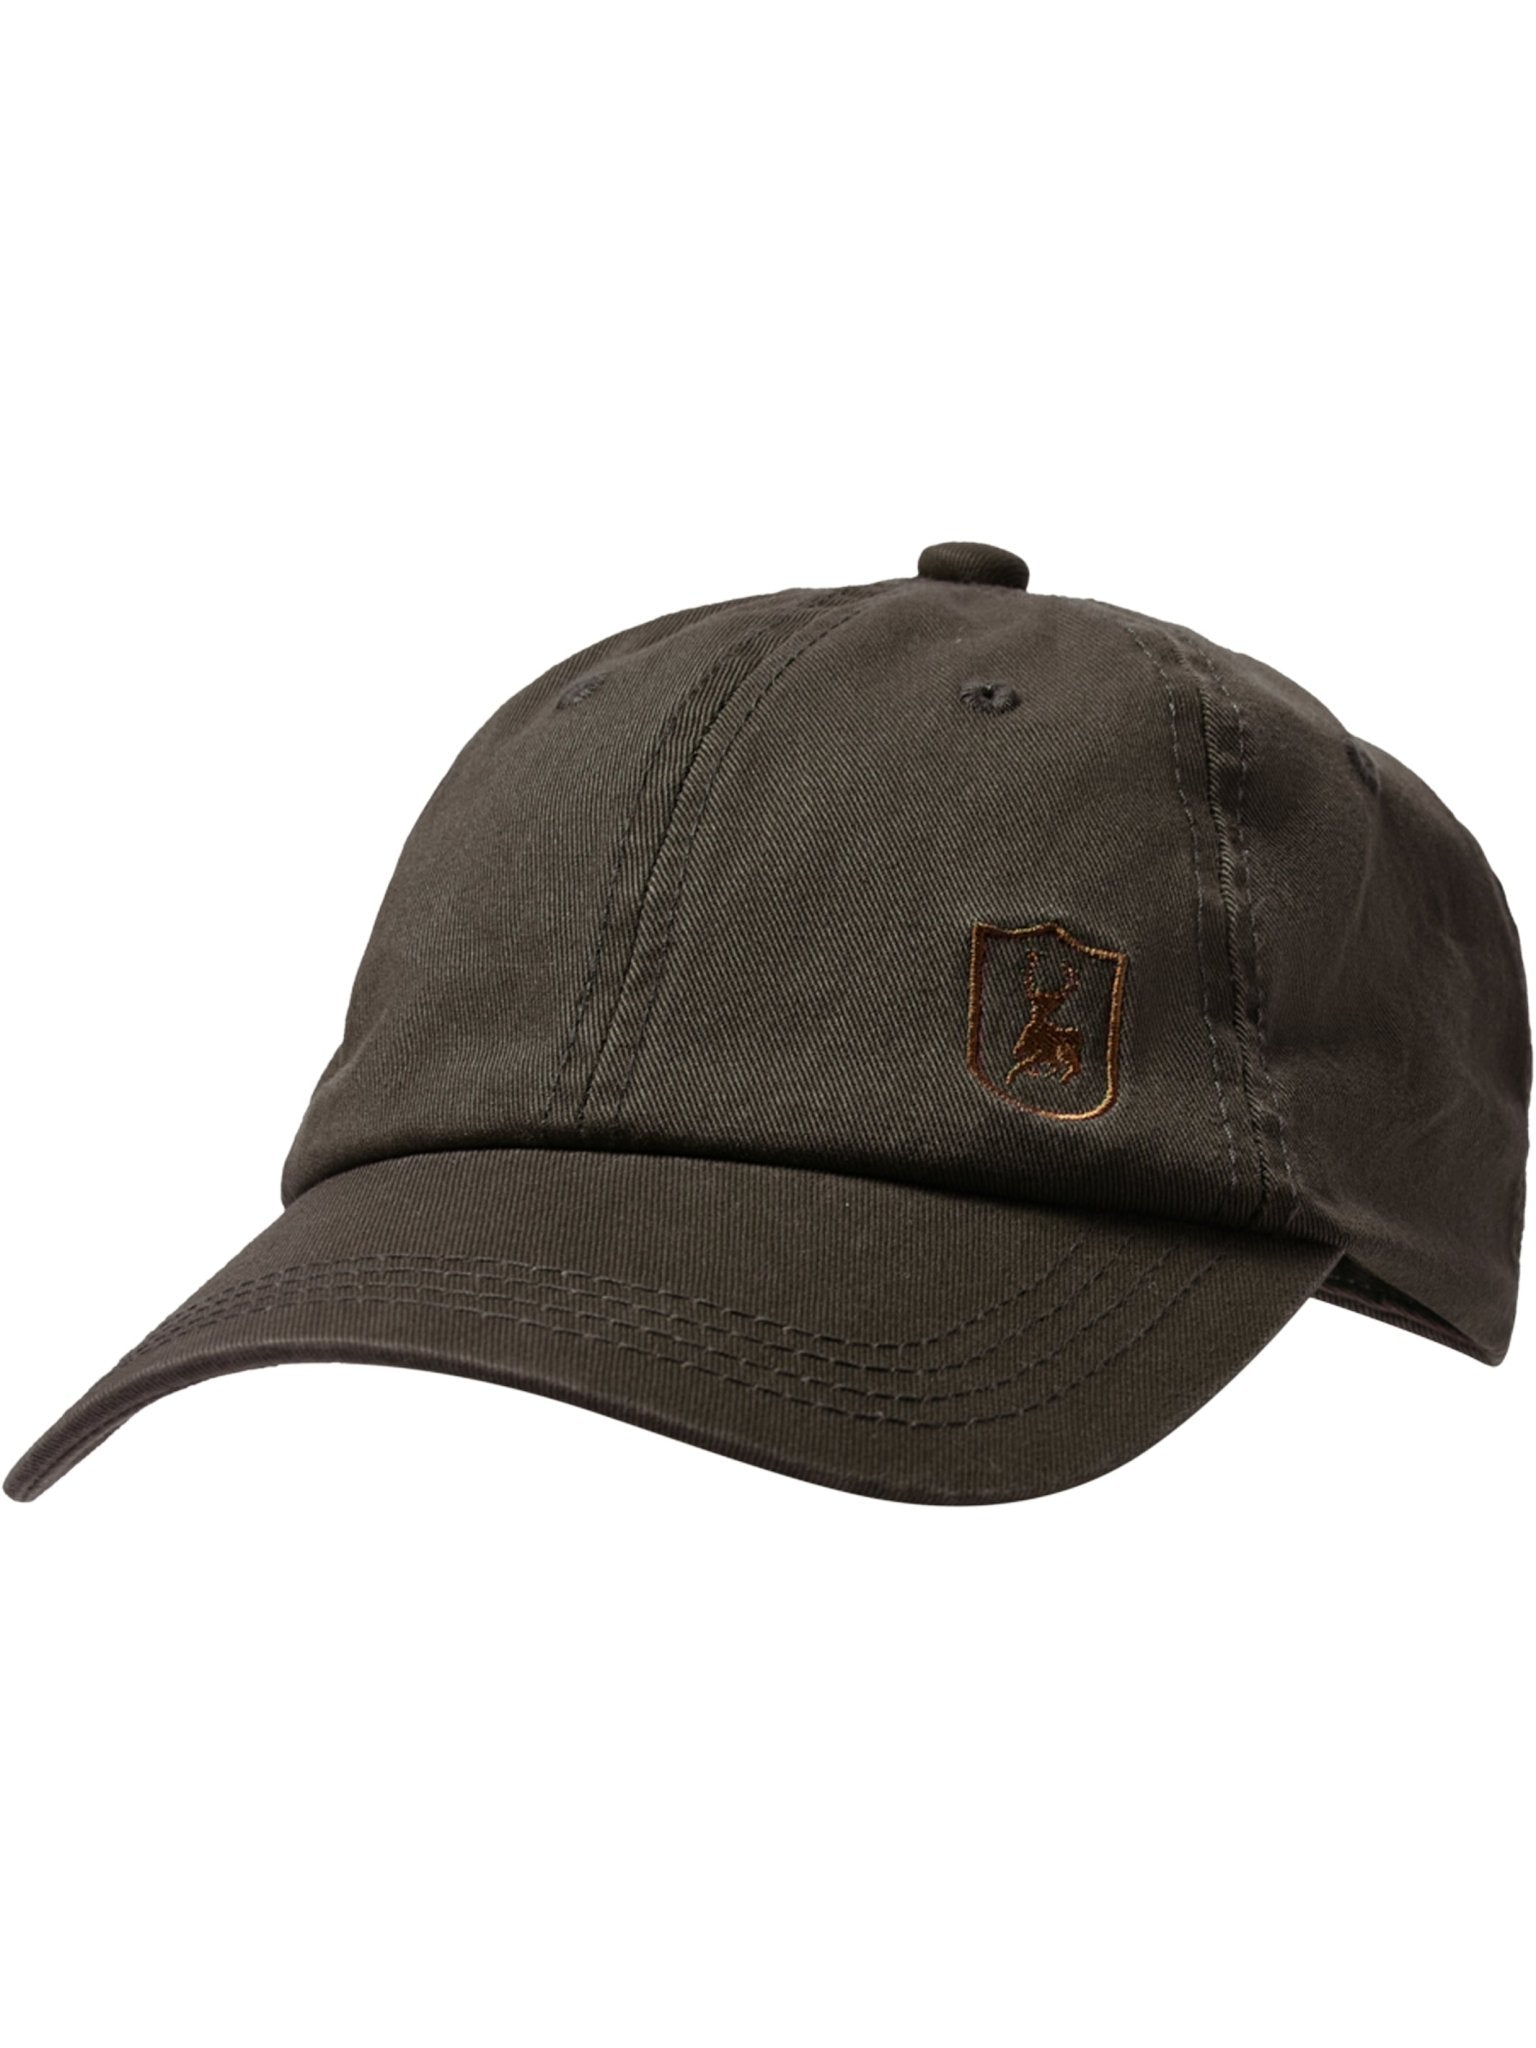 4elementsclothingDeerhunterDeerhunter - Balaton Shield Cap - Adult adjustable Baseball Cap / peaked cap / hatHats6091-381